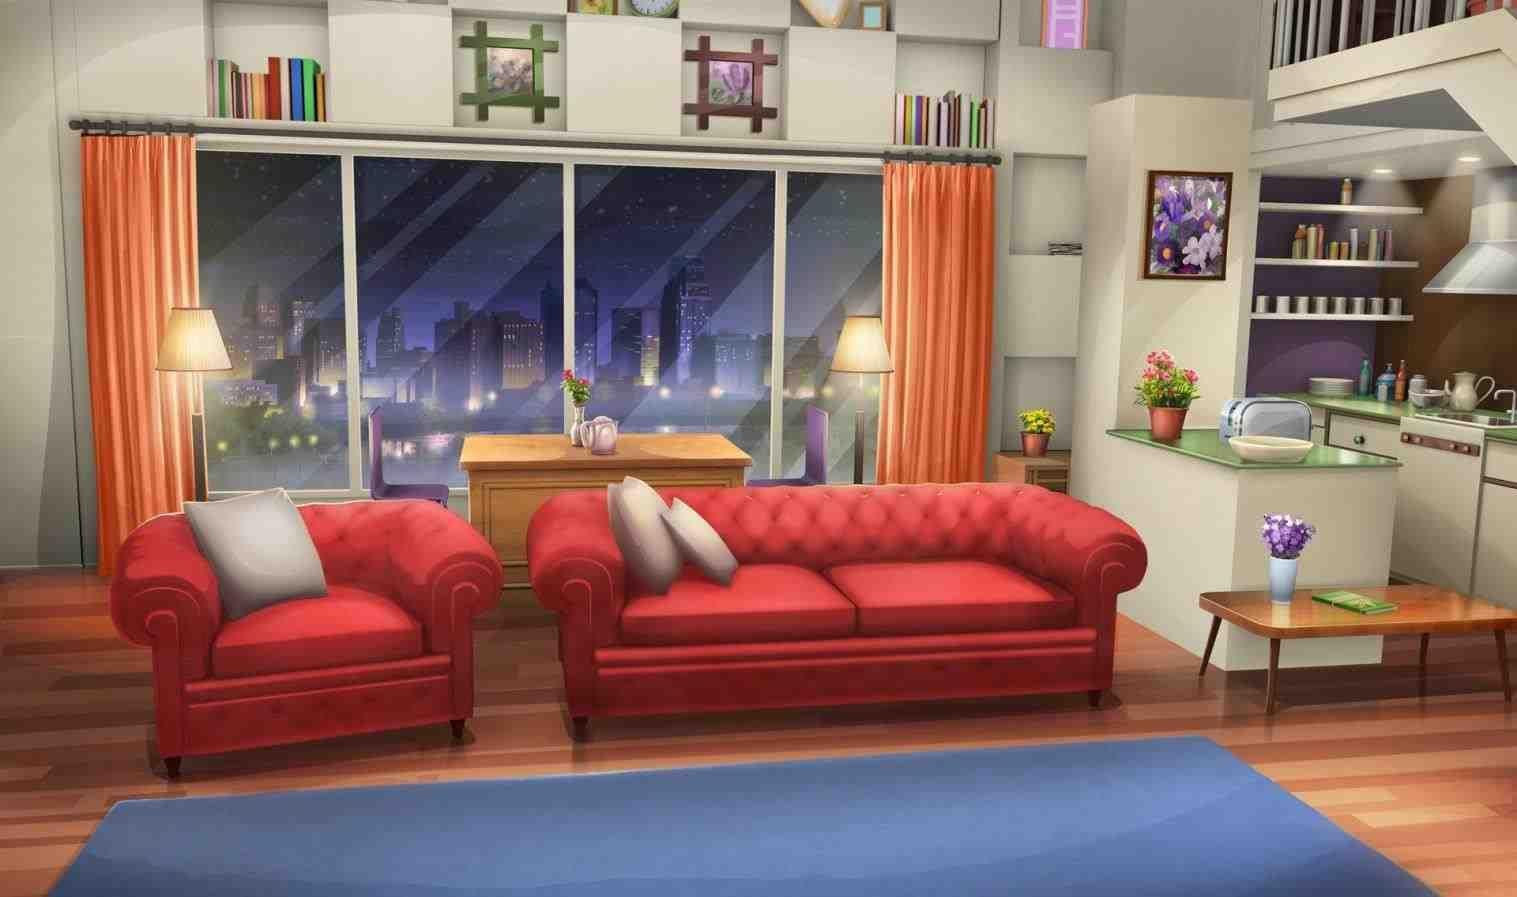 unknown origin  Dream home design Anime house Living room background